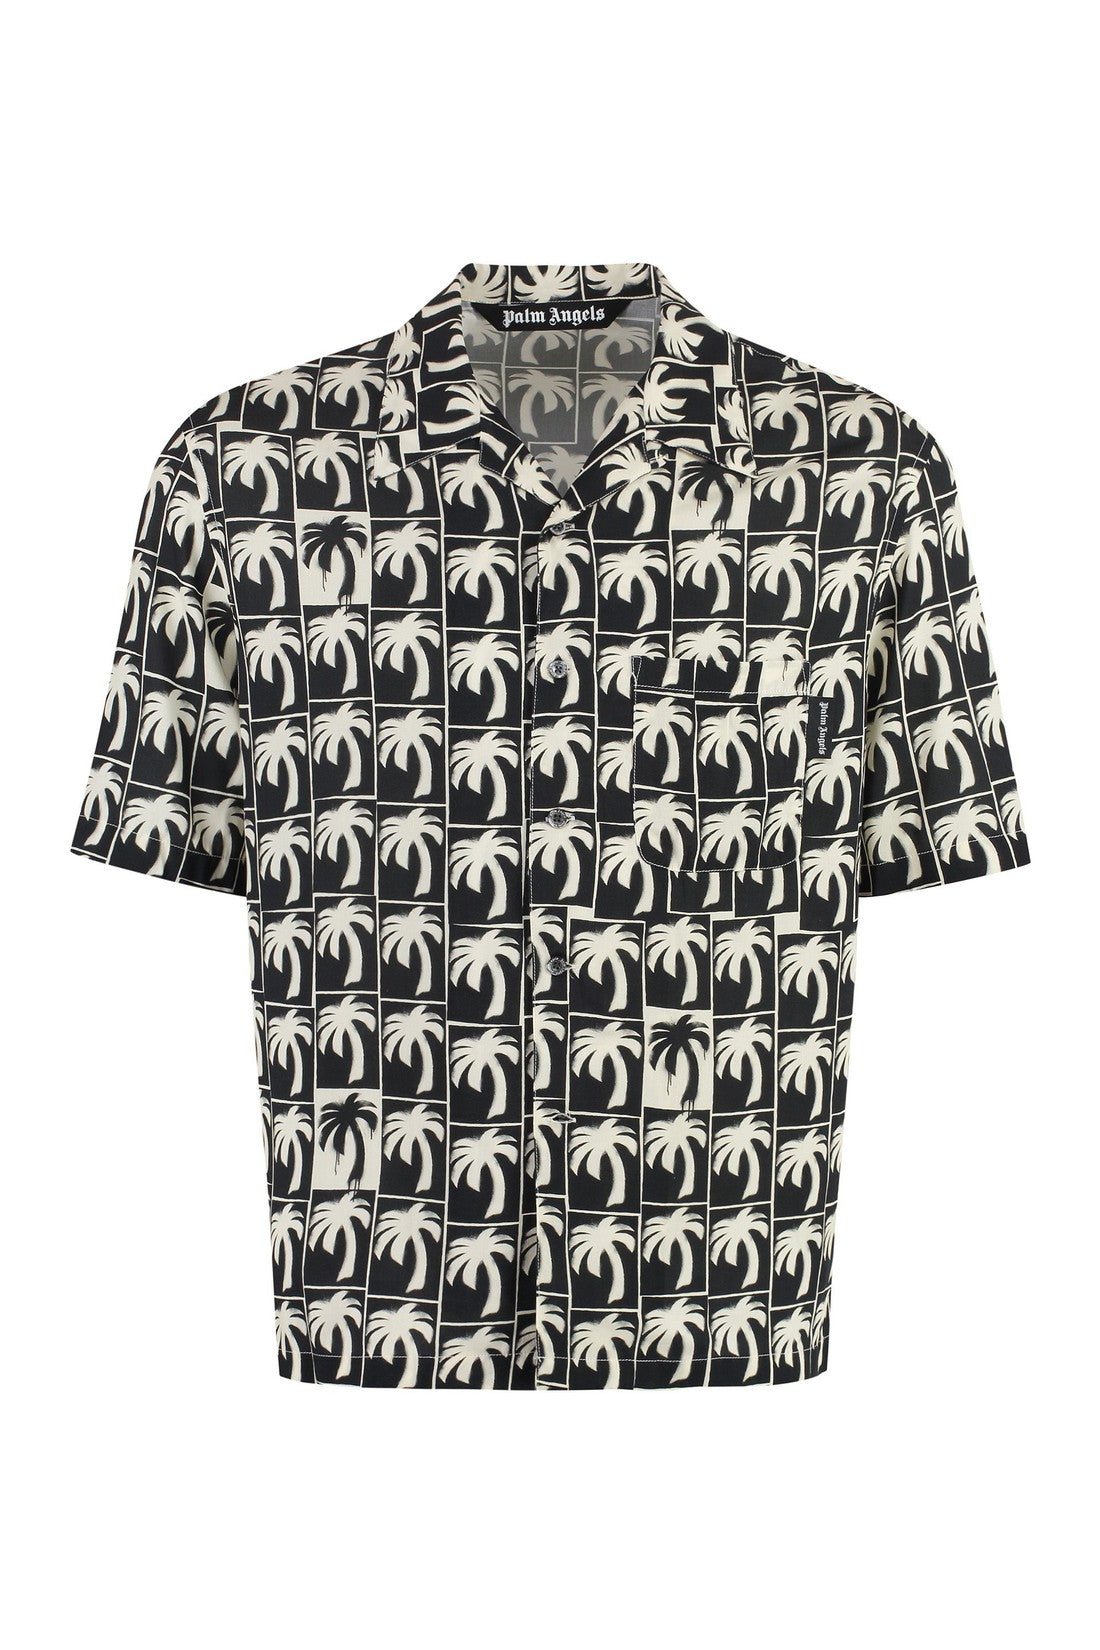 Palm Angels-OUTLET-SALE-Printed viscose shirt-ARCHIVIST